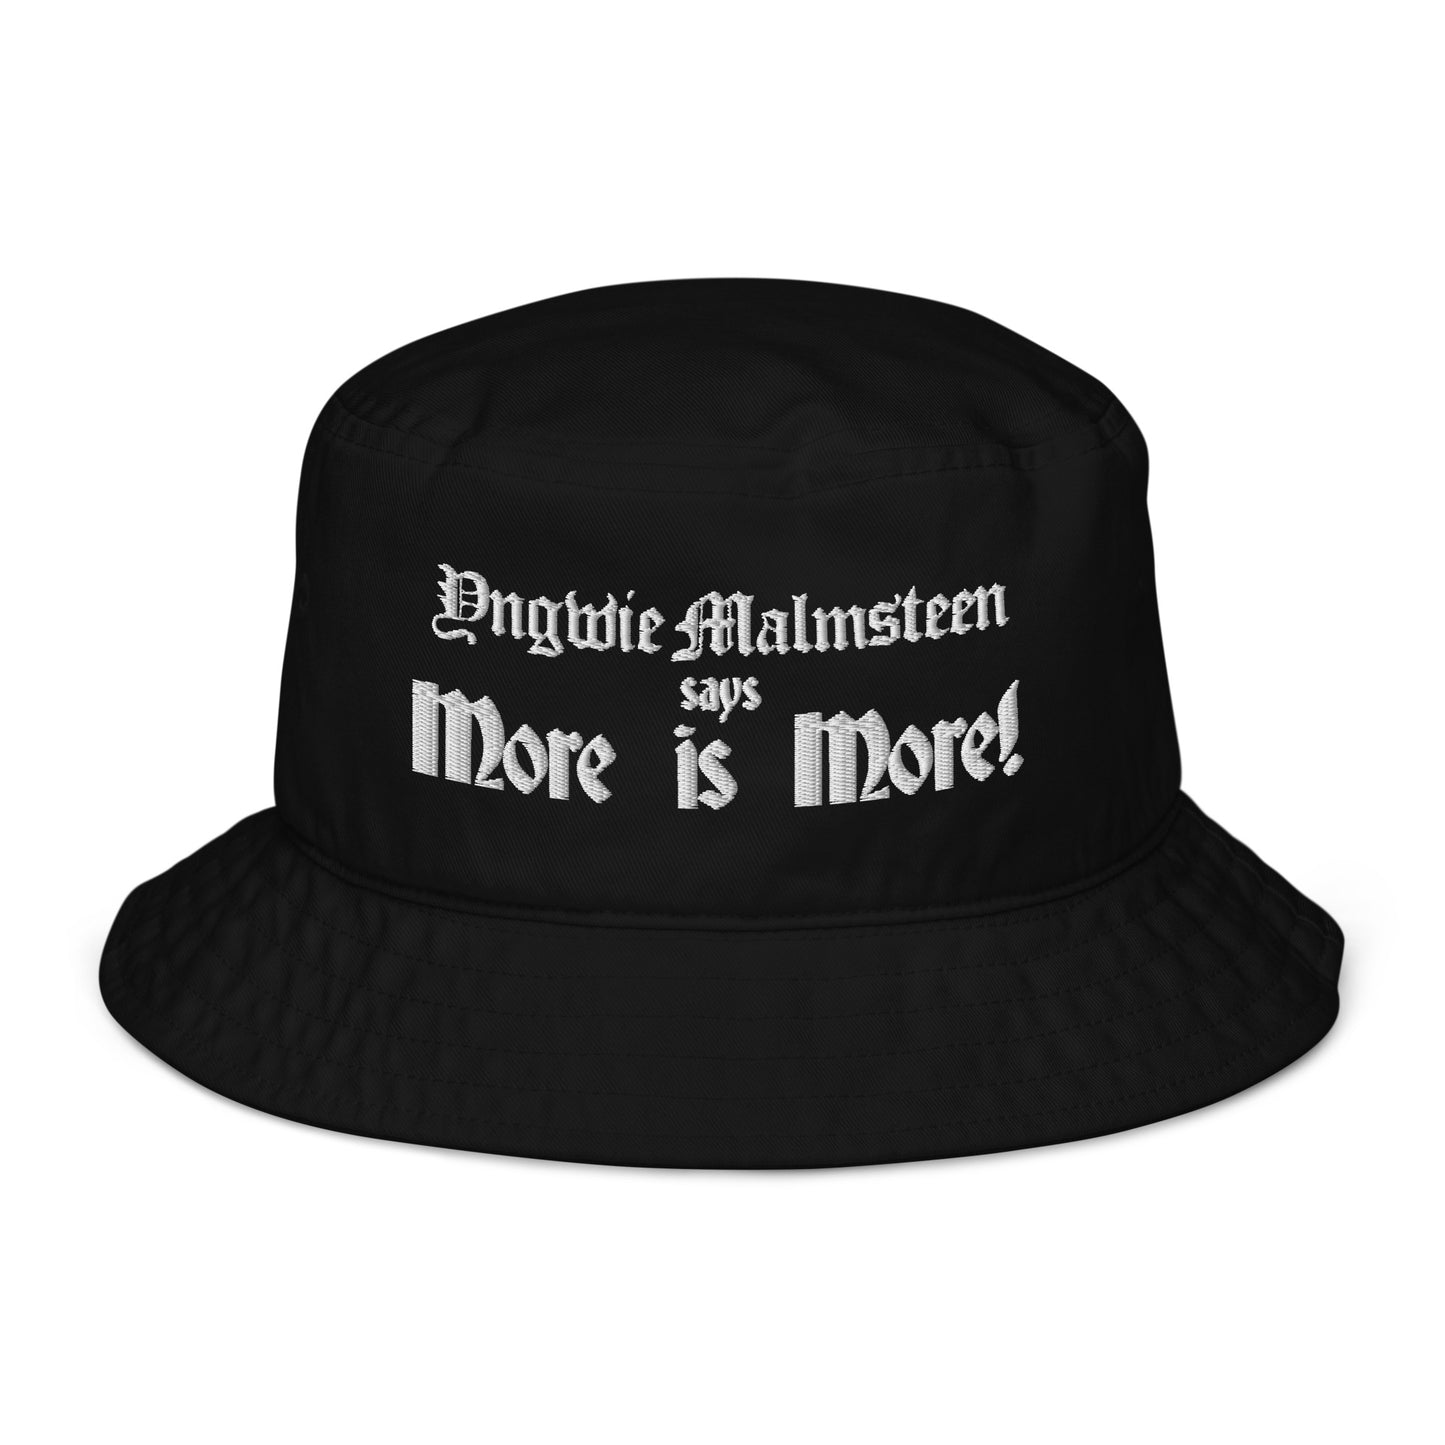 Yngwie Malmsteen - More is More bucket hat